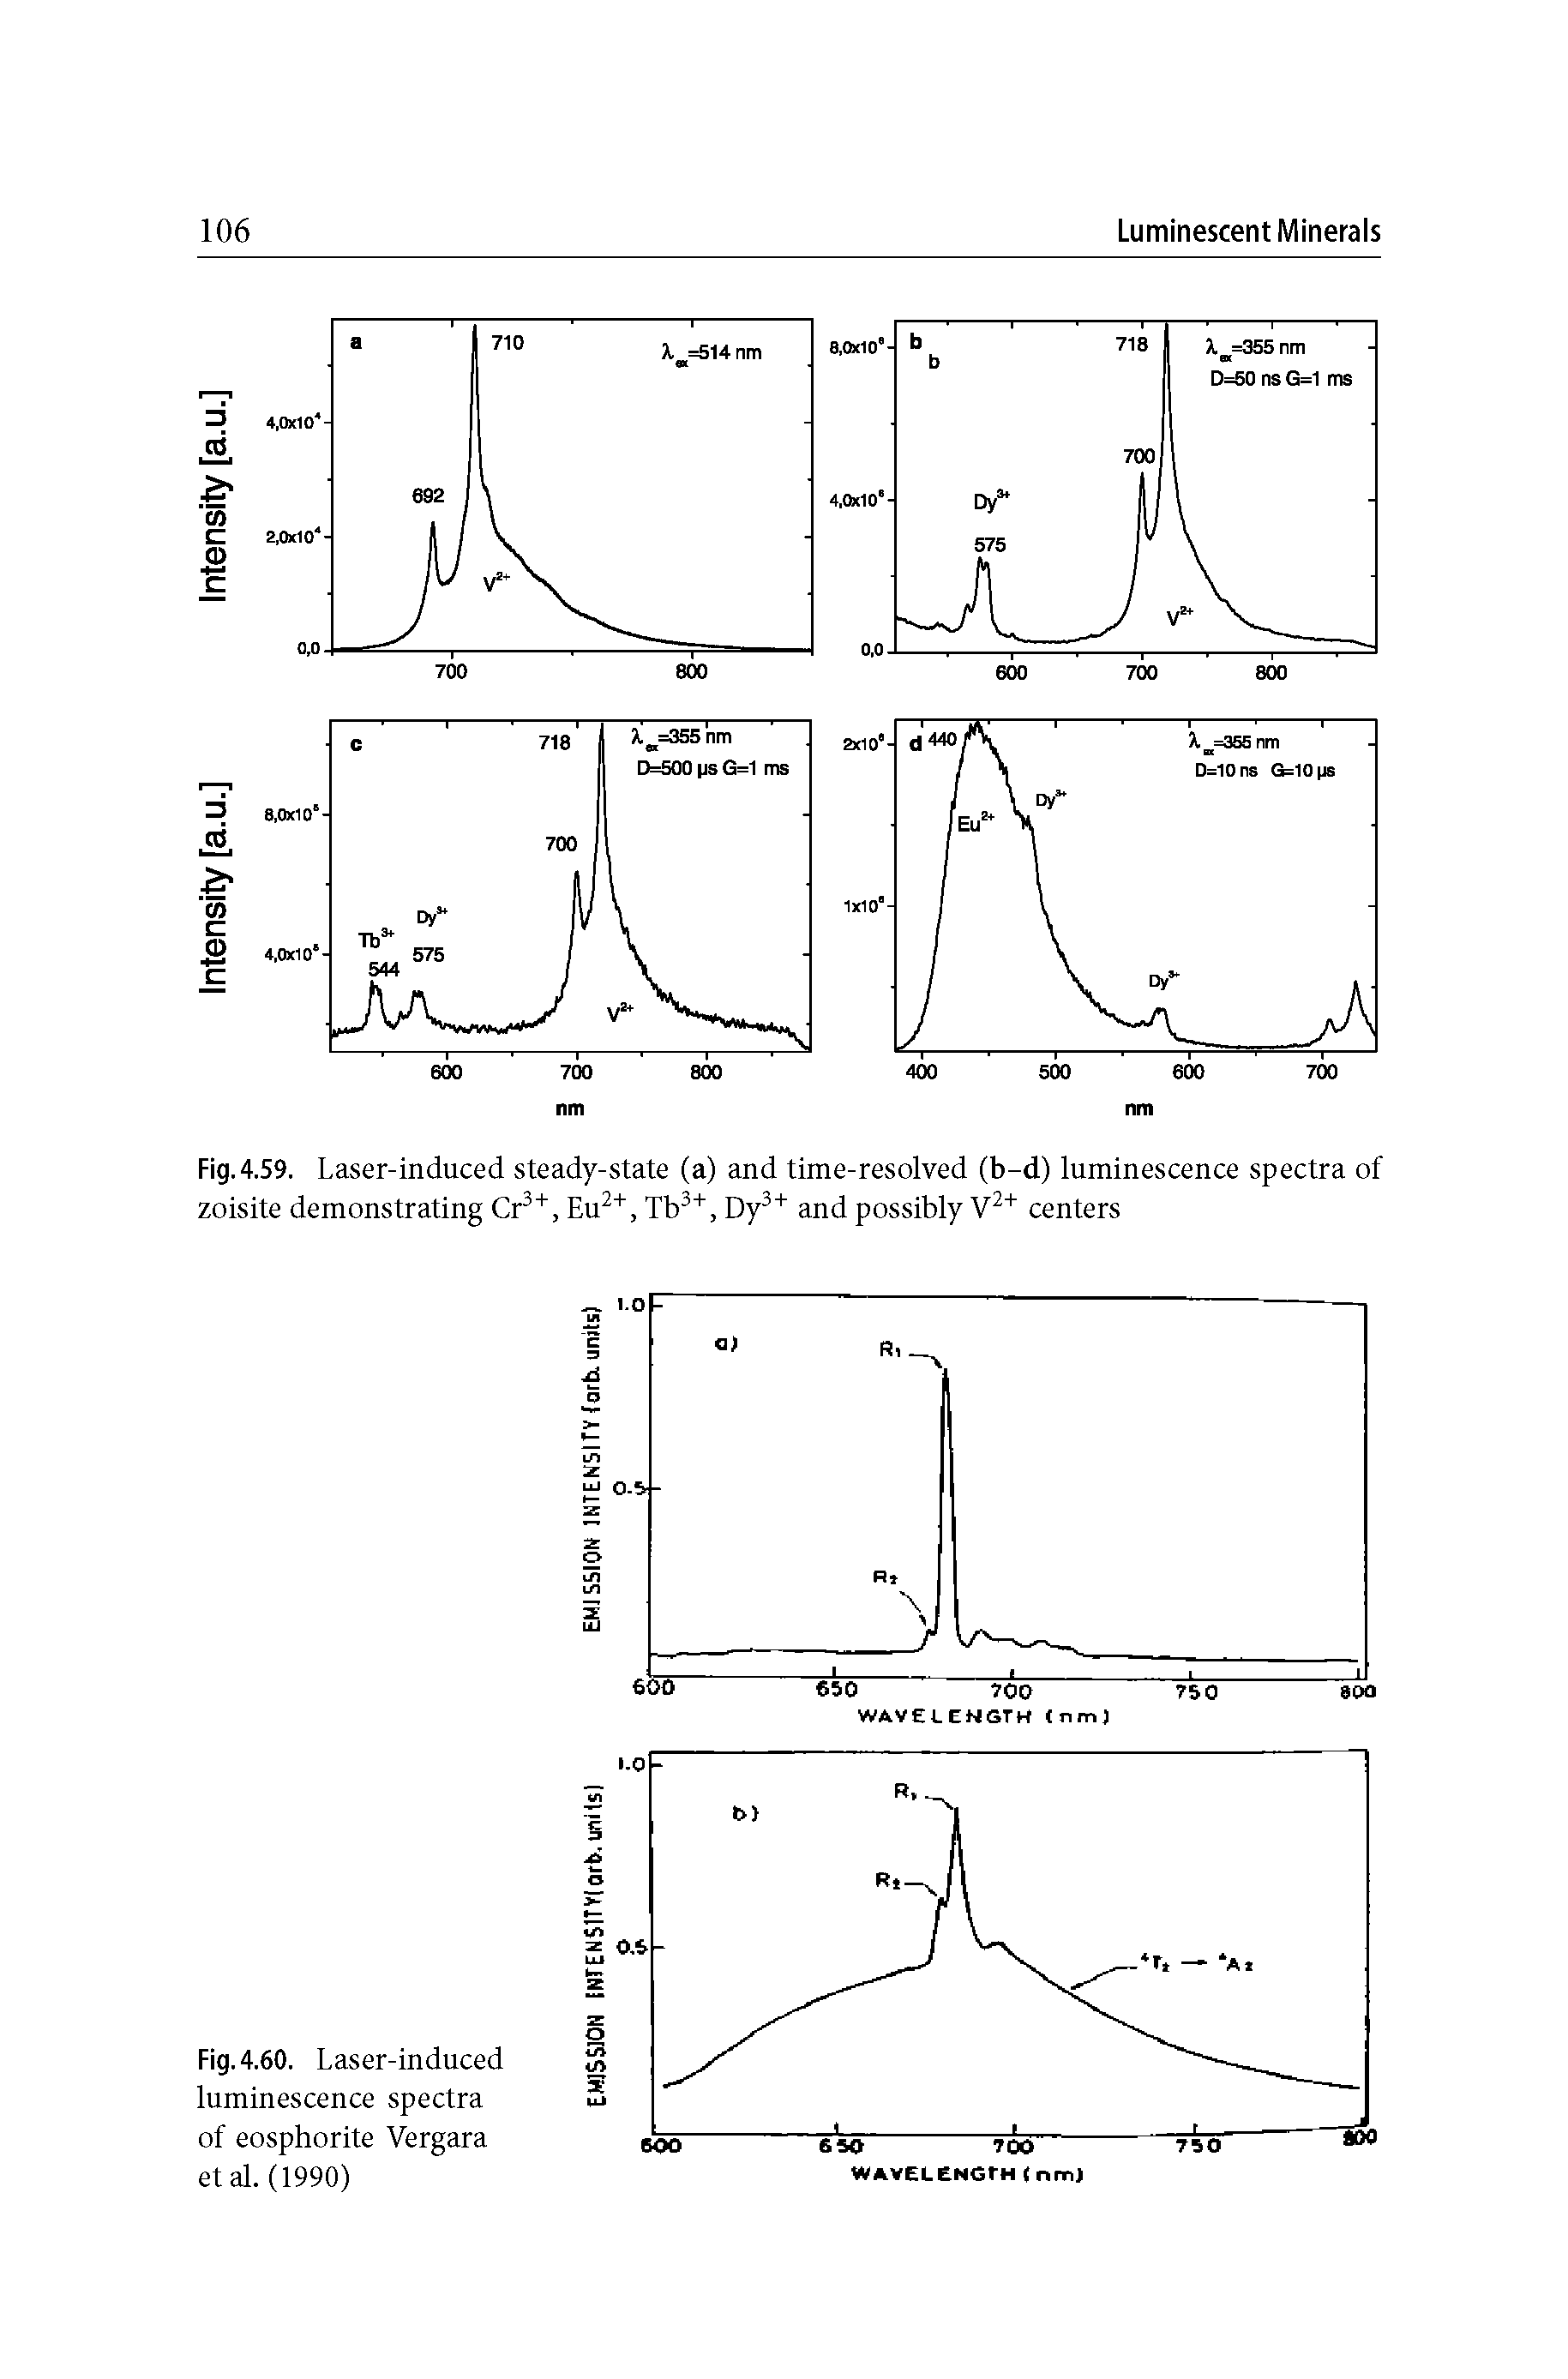 Fig. 4.60. Laser-induced luminescence spectra of eosphorite Vergara et al. (1990)...